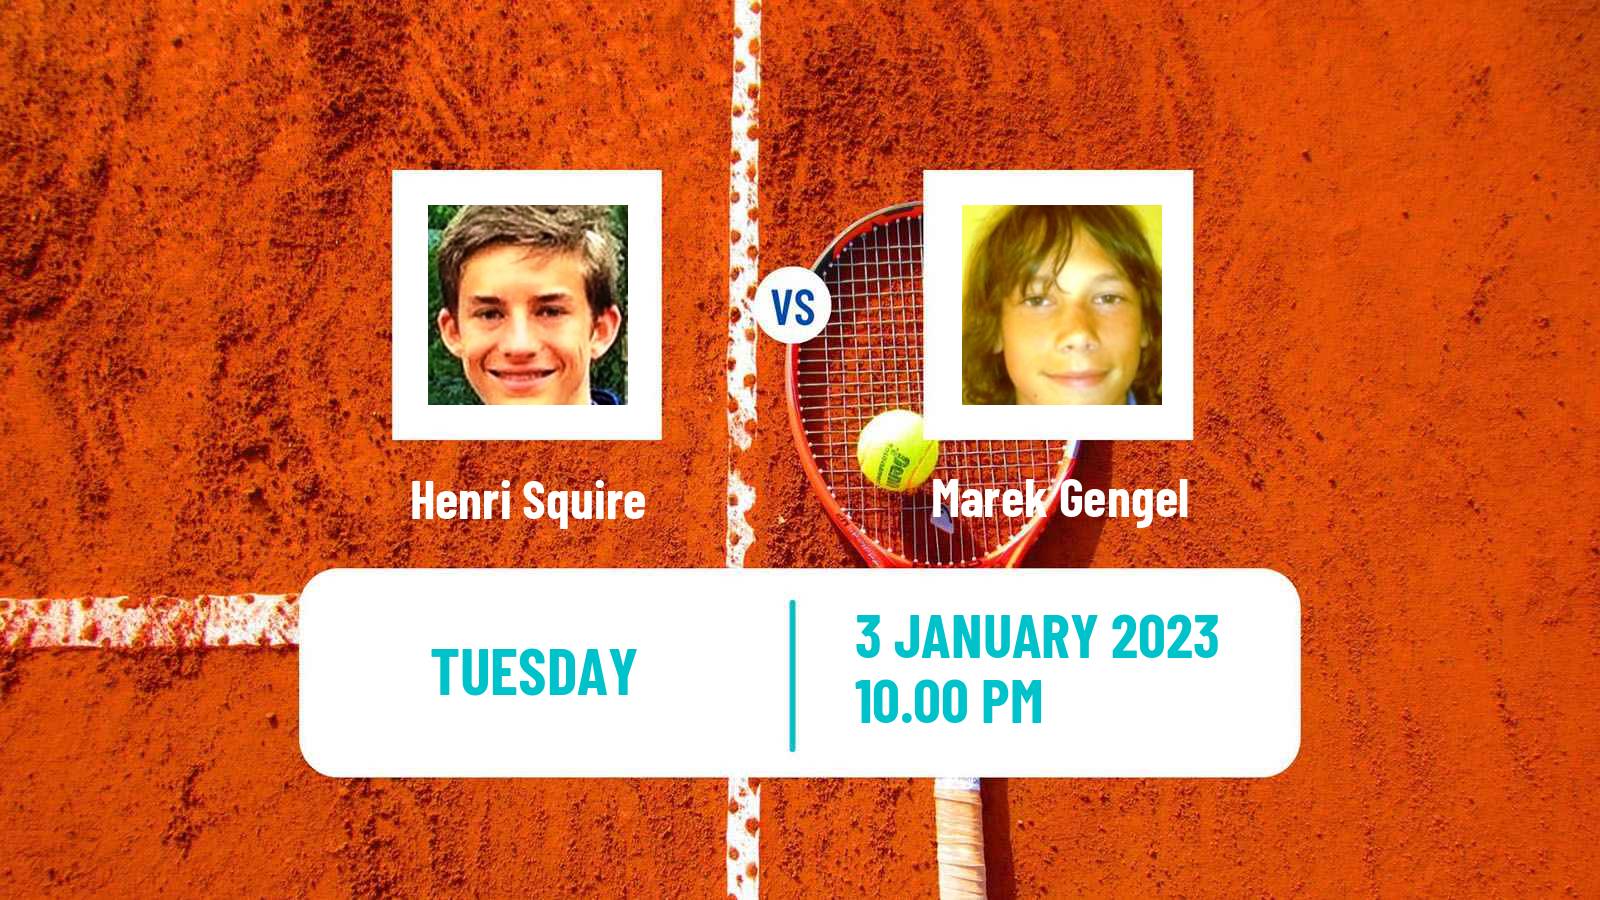 Tennis ATP Challenger Henri Squire - Marek Gengel